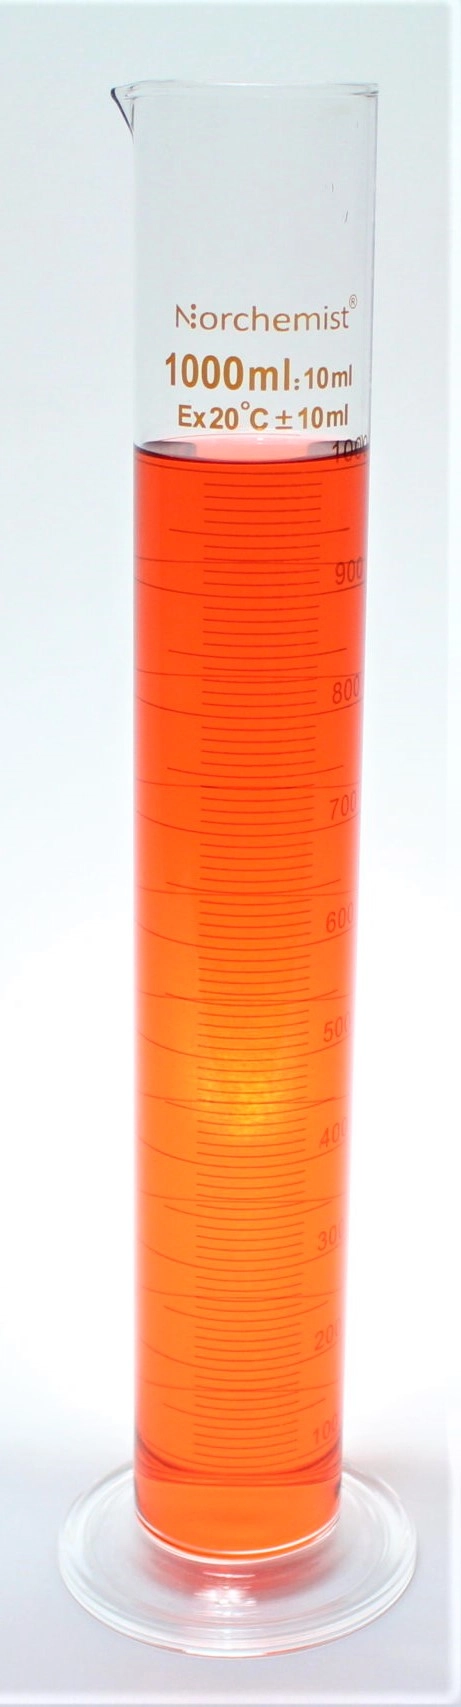 Norchemist GP-GC-0024 Graduated Cylinder (1000mL)